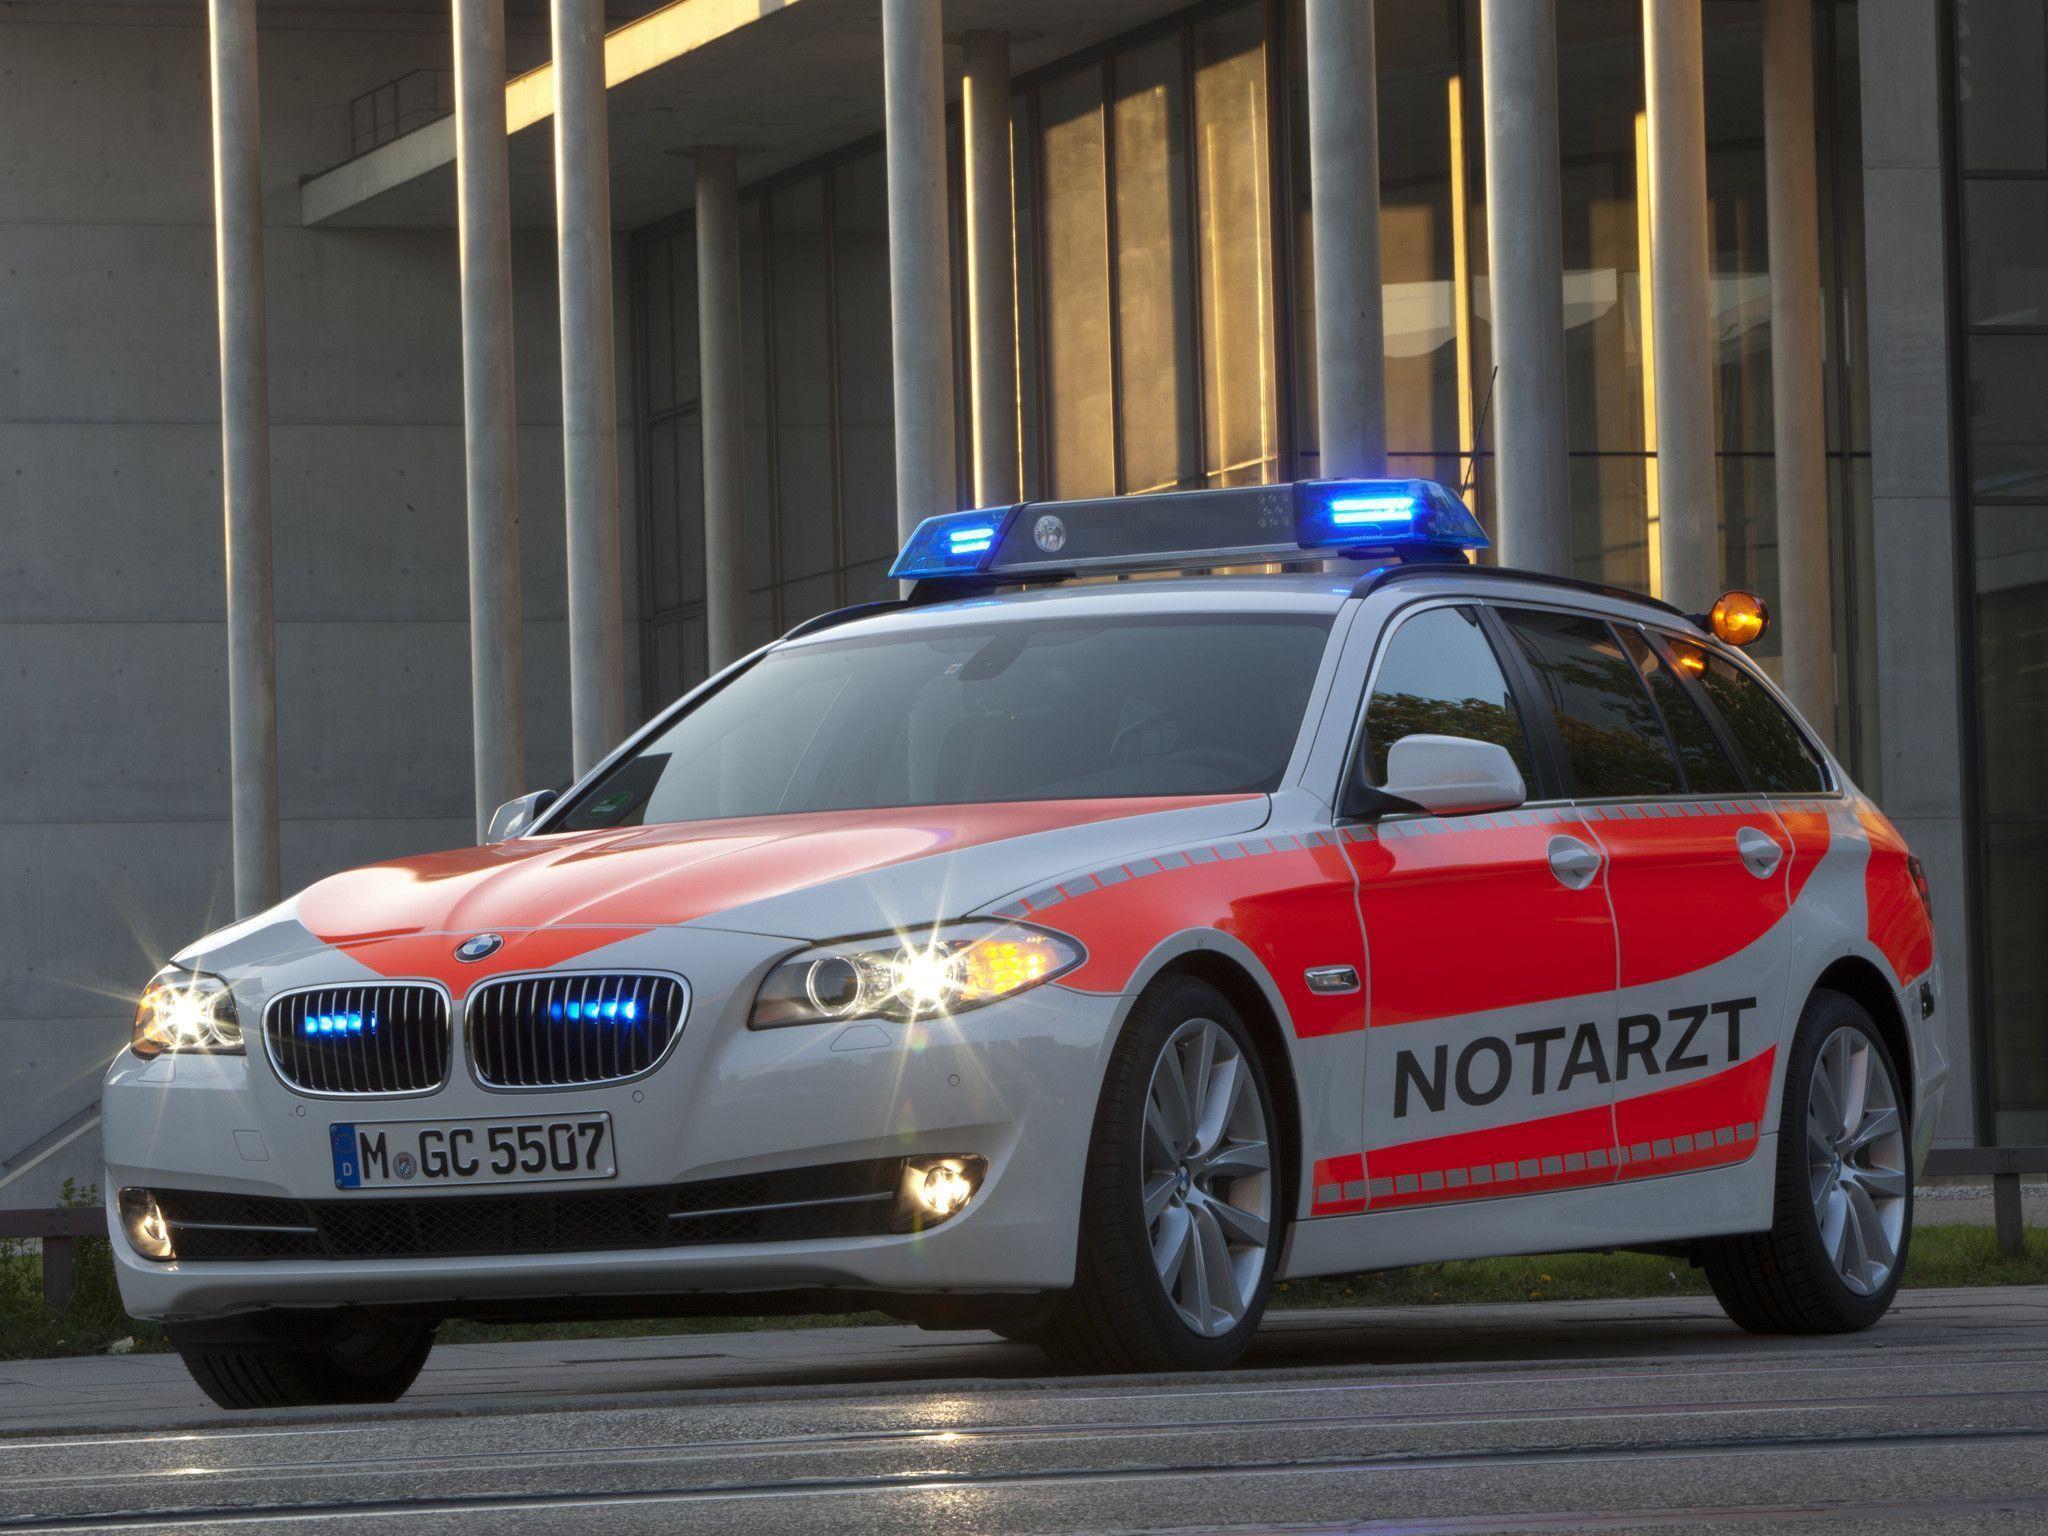 BMW 5 Series Touring Notarzt F11 Ambulance Emergency